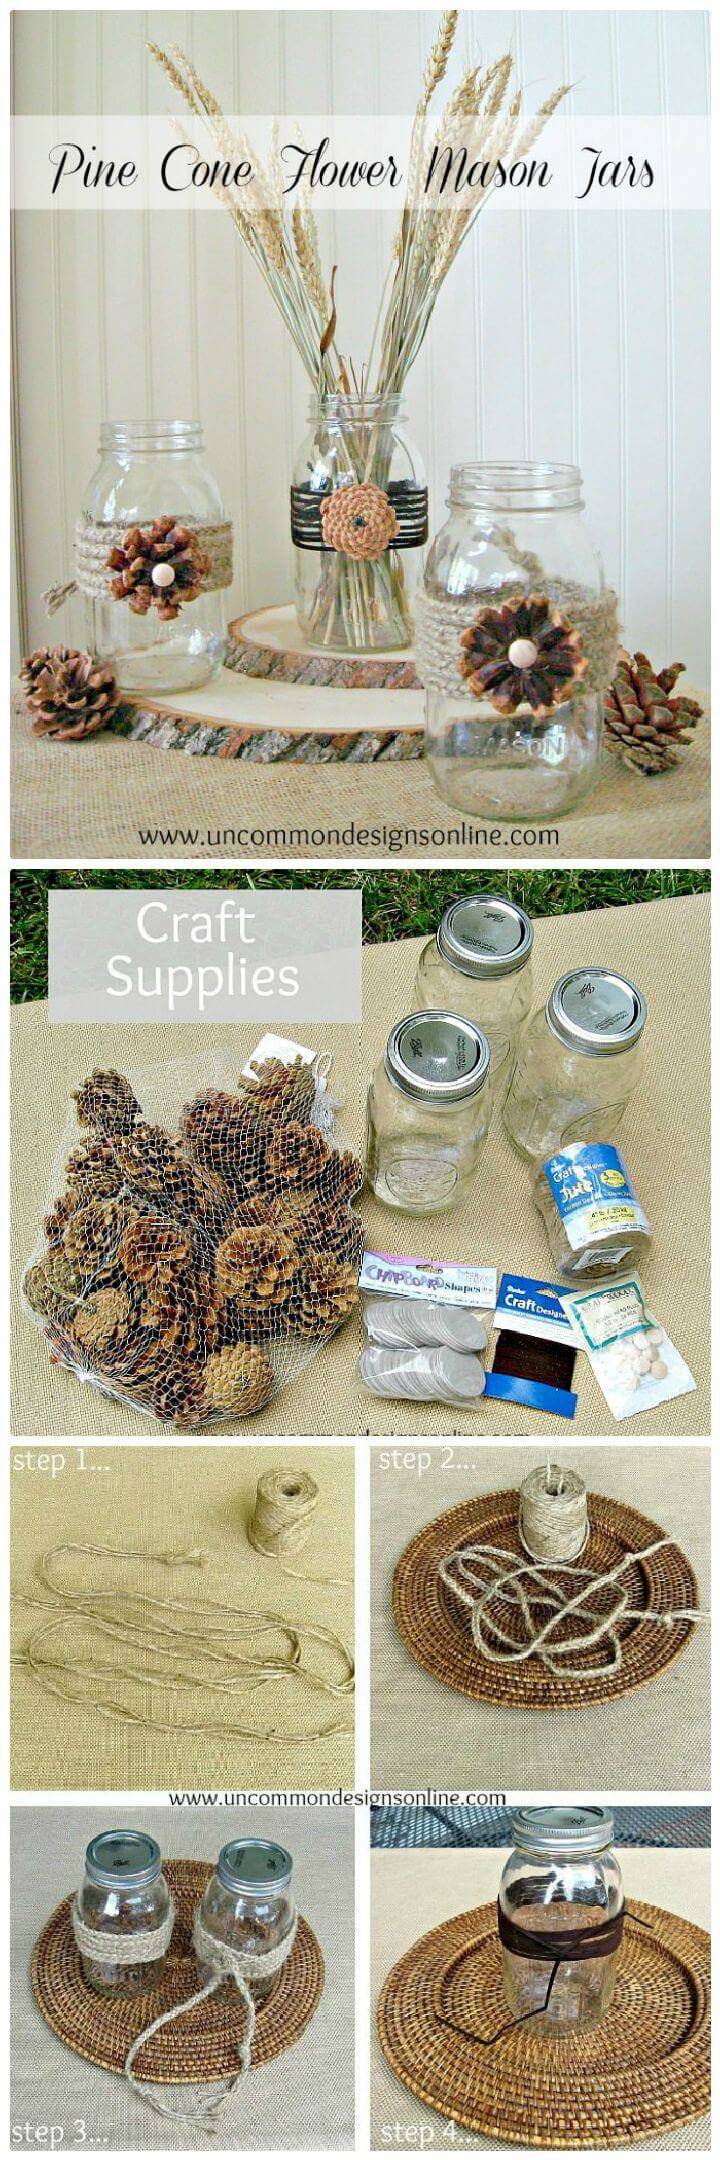 DIY Pine Cone Flower Embellished Mason Jars